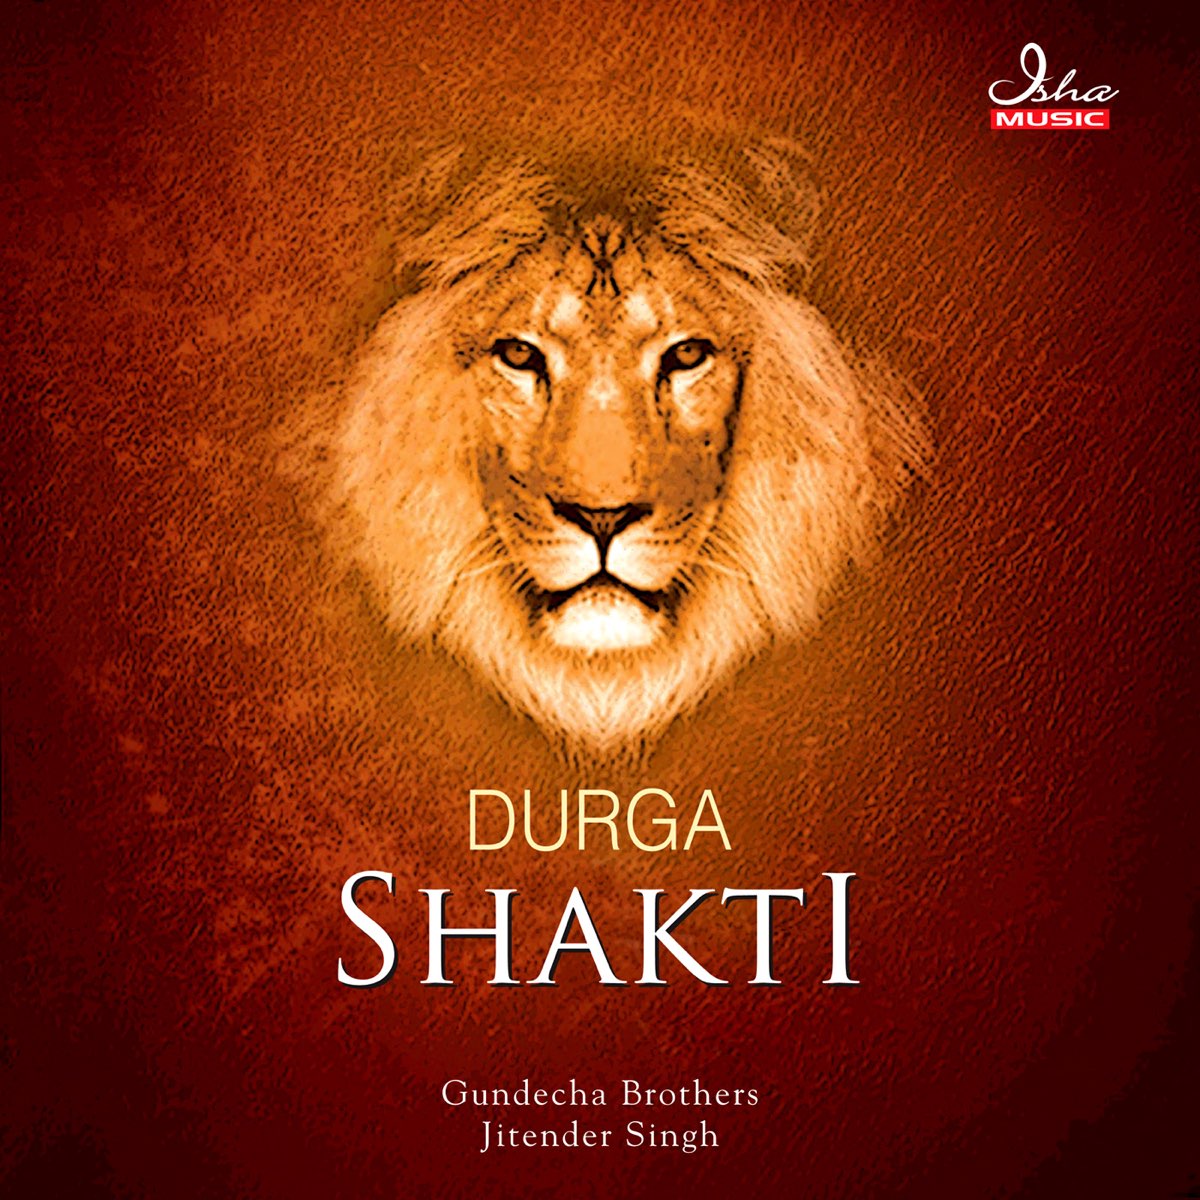 Durga Shakti by Gundecha Brothers & Jitender Singh on Apple Music